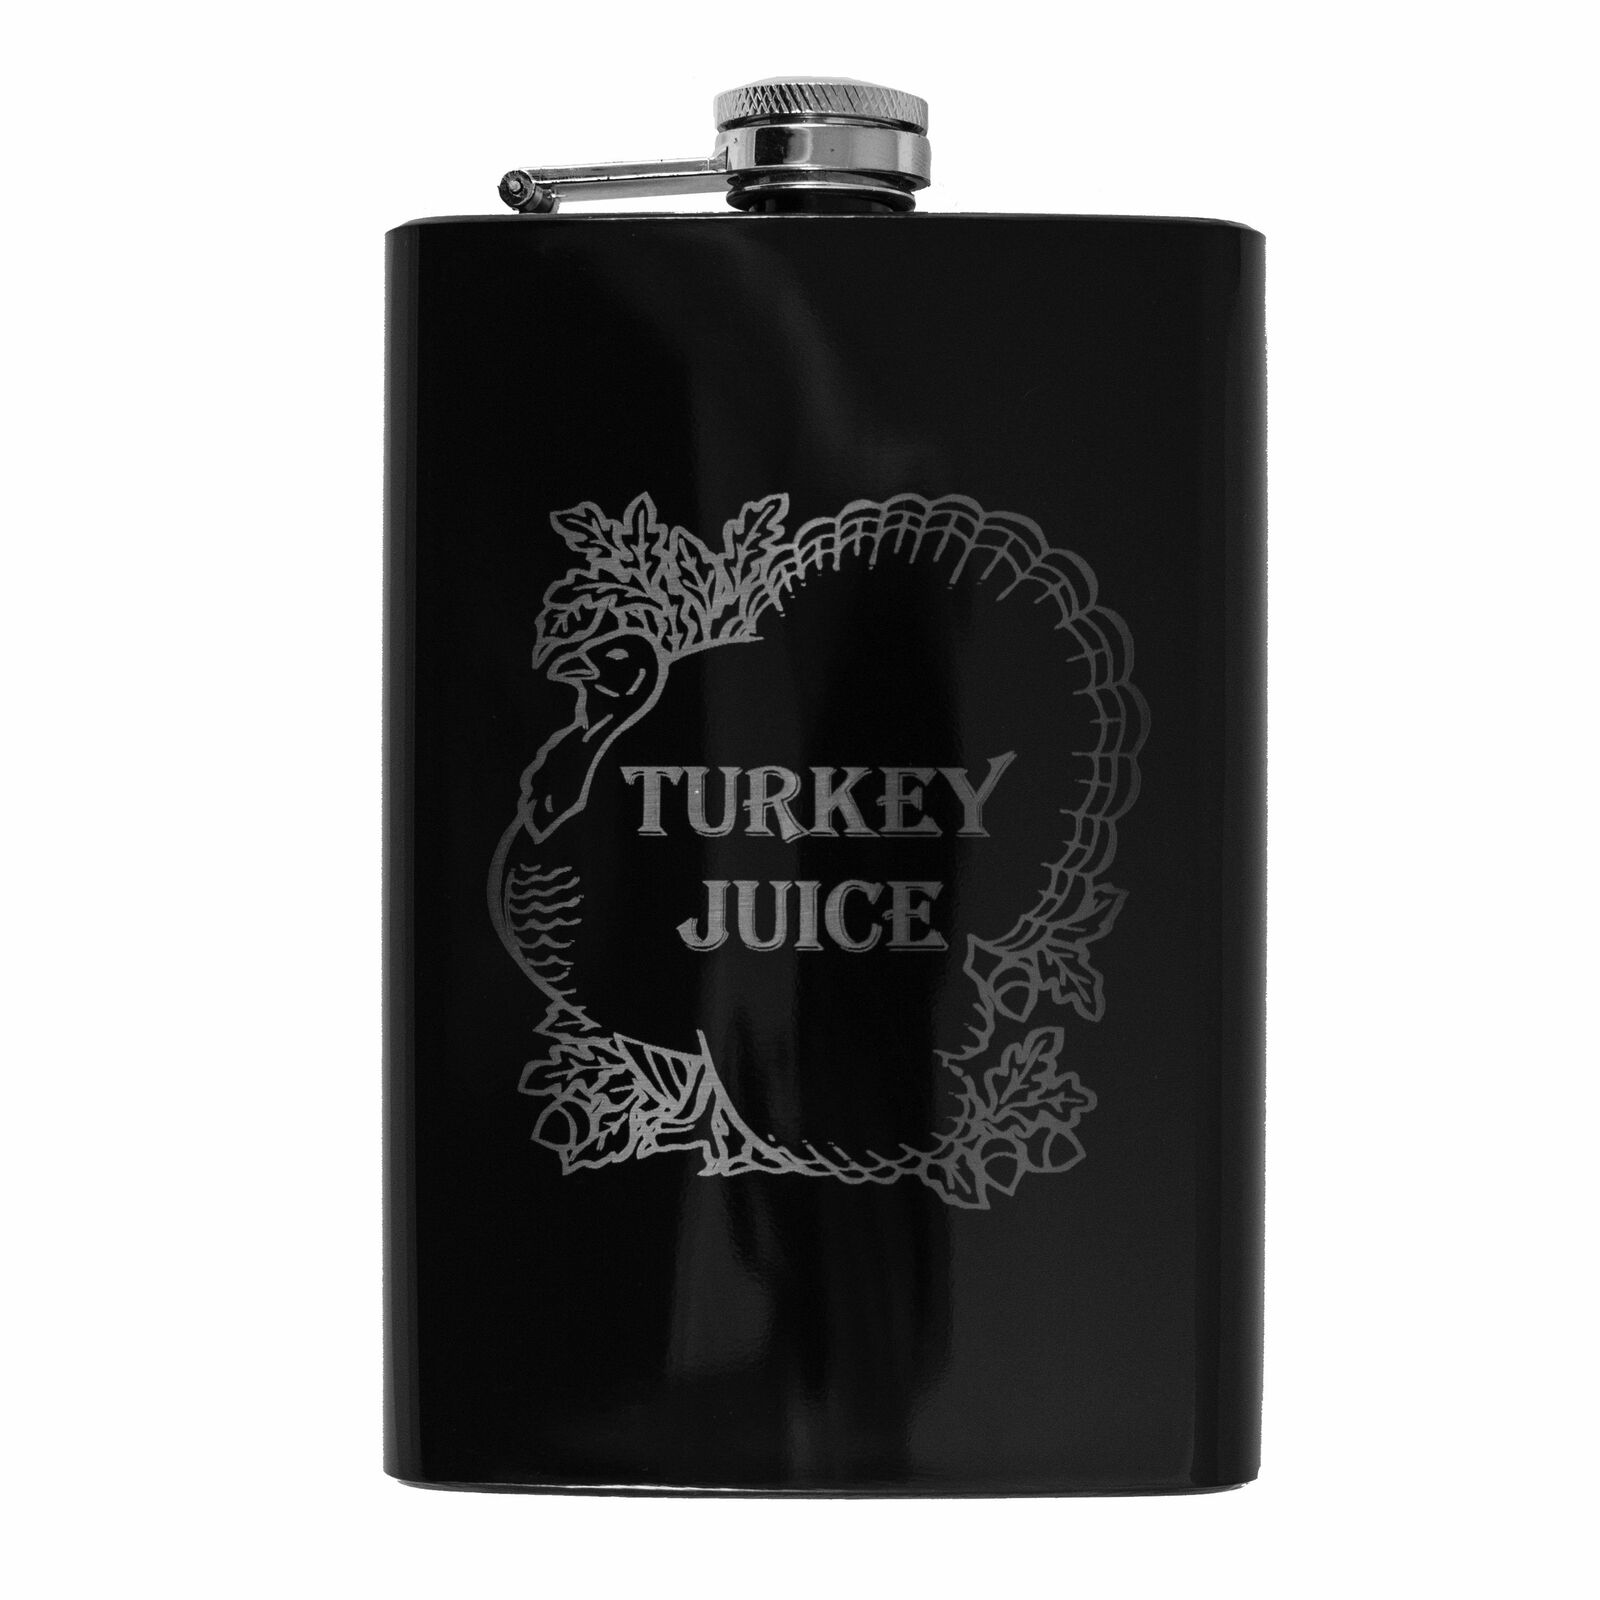 8oz Online limited product SALENEW very popular Turkey Juice Black Flask L1